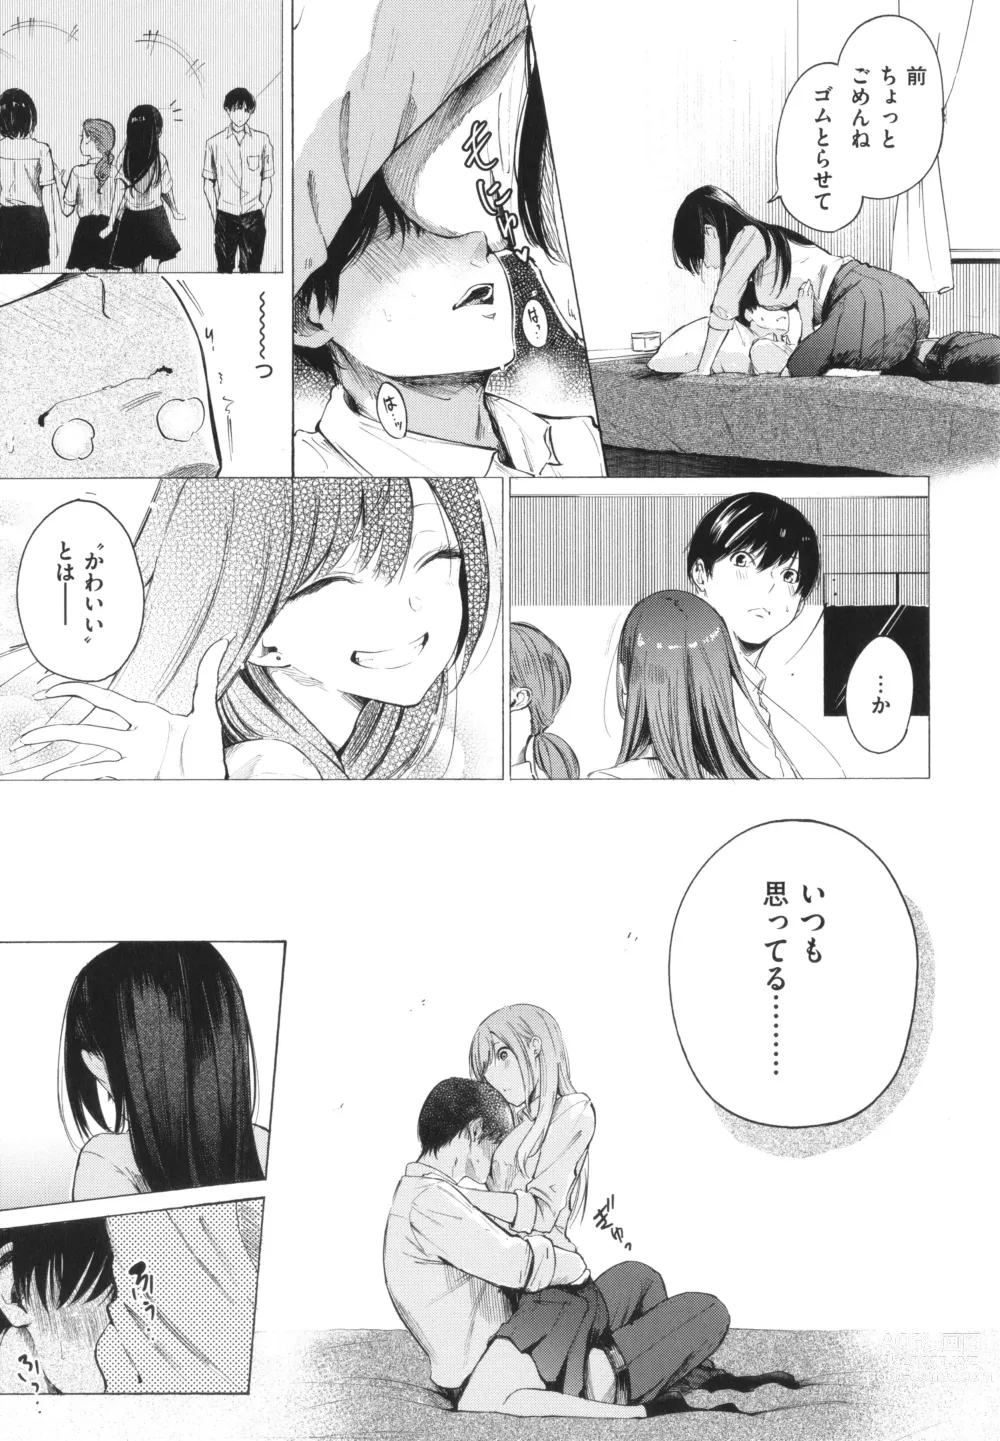 Page 186 of manga Frustration Girls